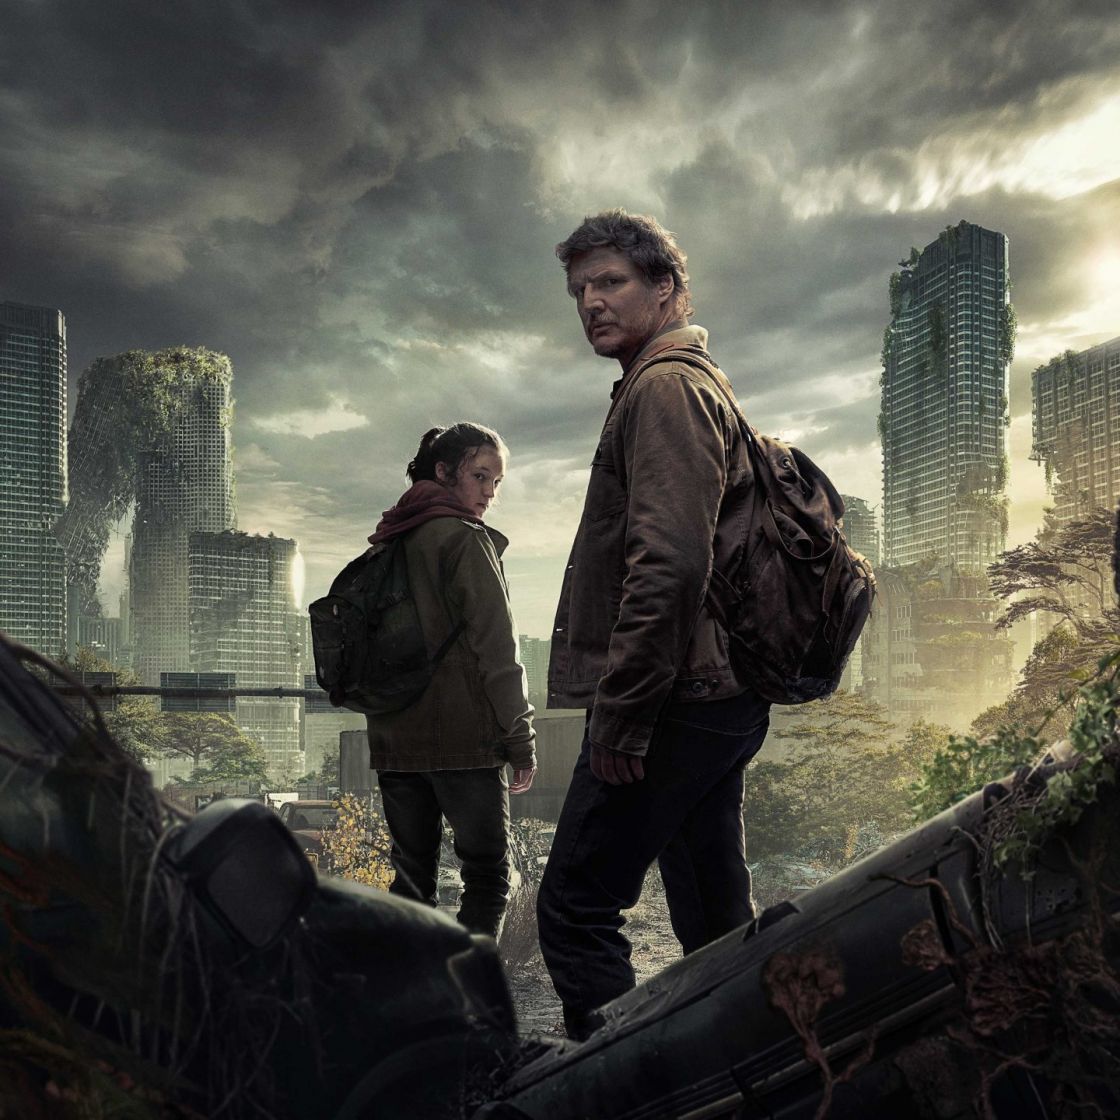 The Last of Us' Season 1 Episode 2 Recap: Umami Bomb